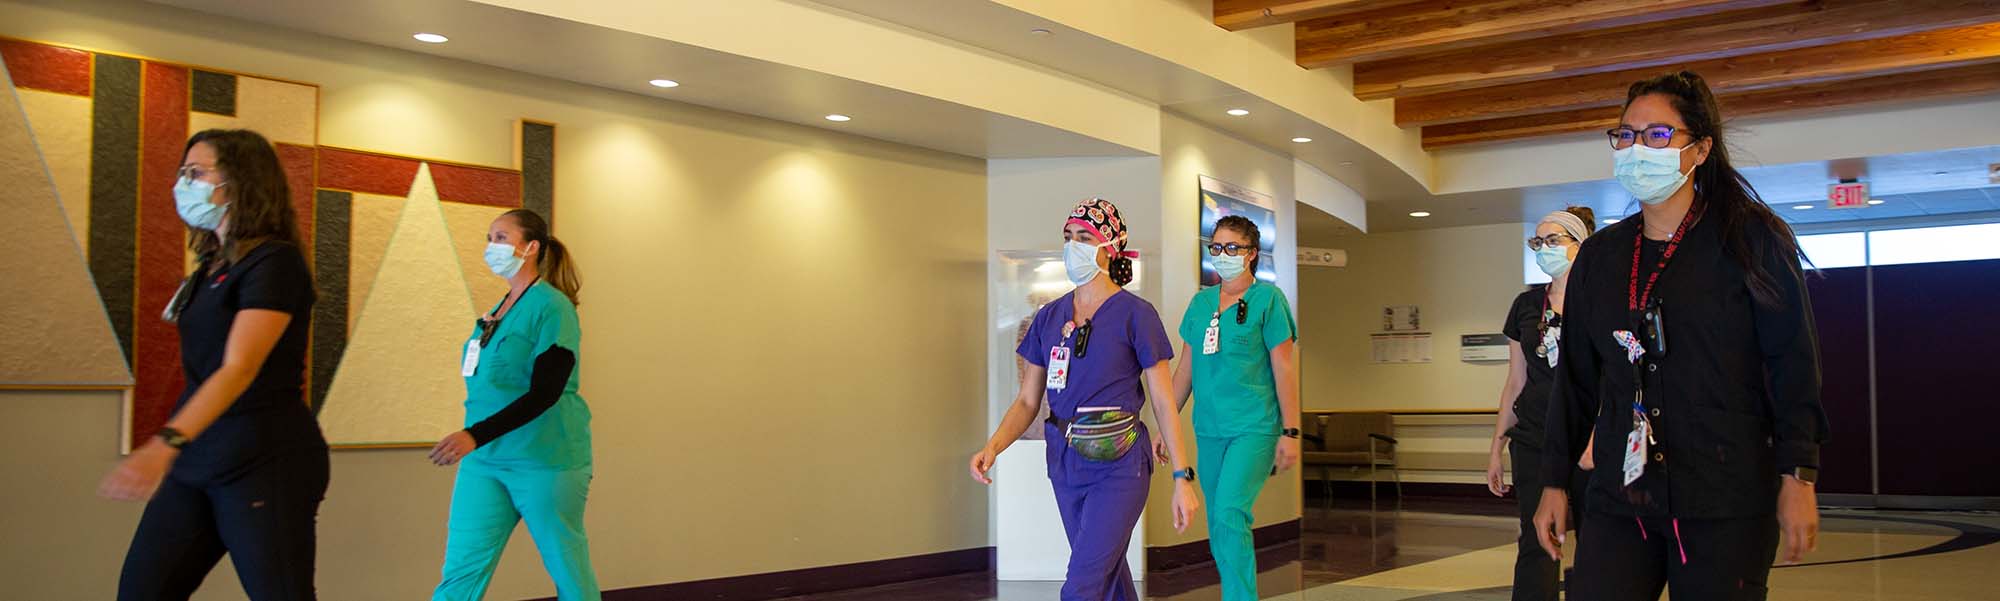 Медсестры ЕНД идут по коридору